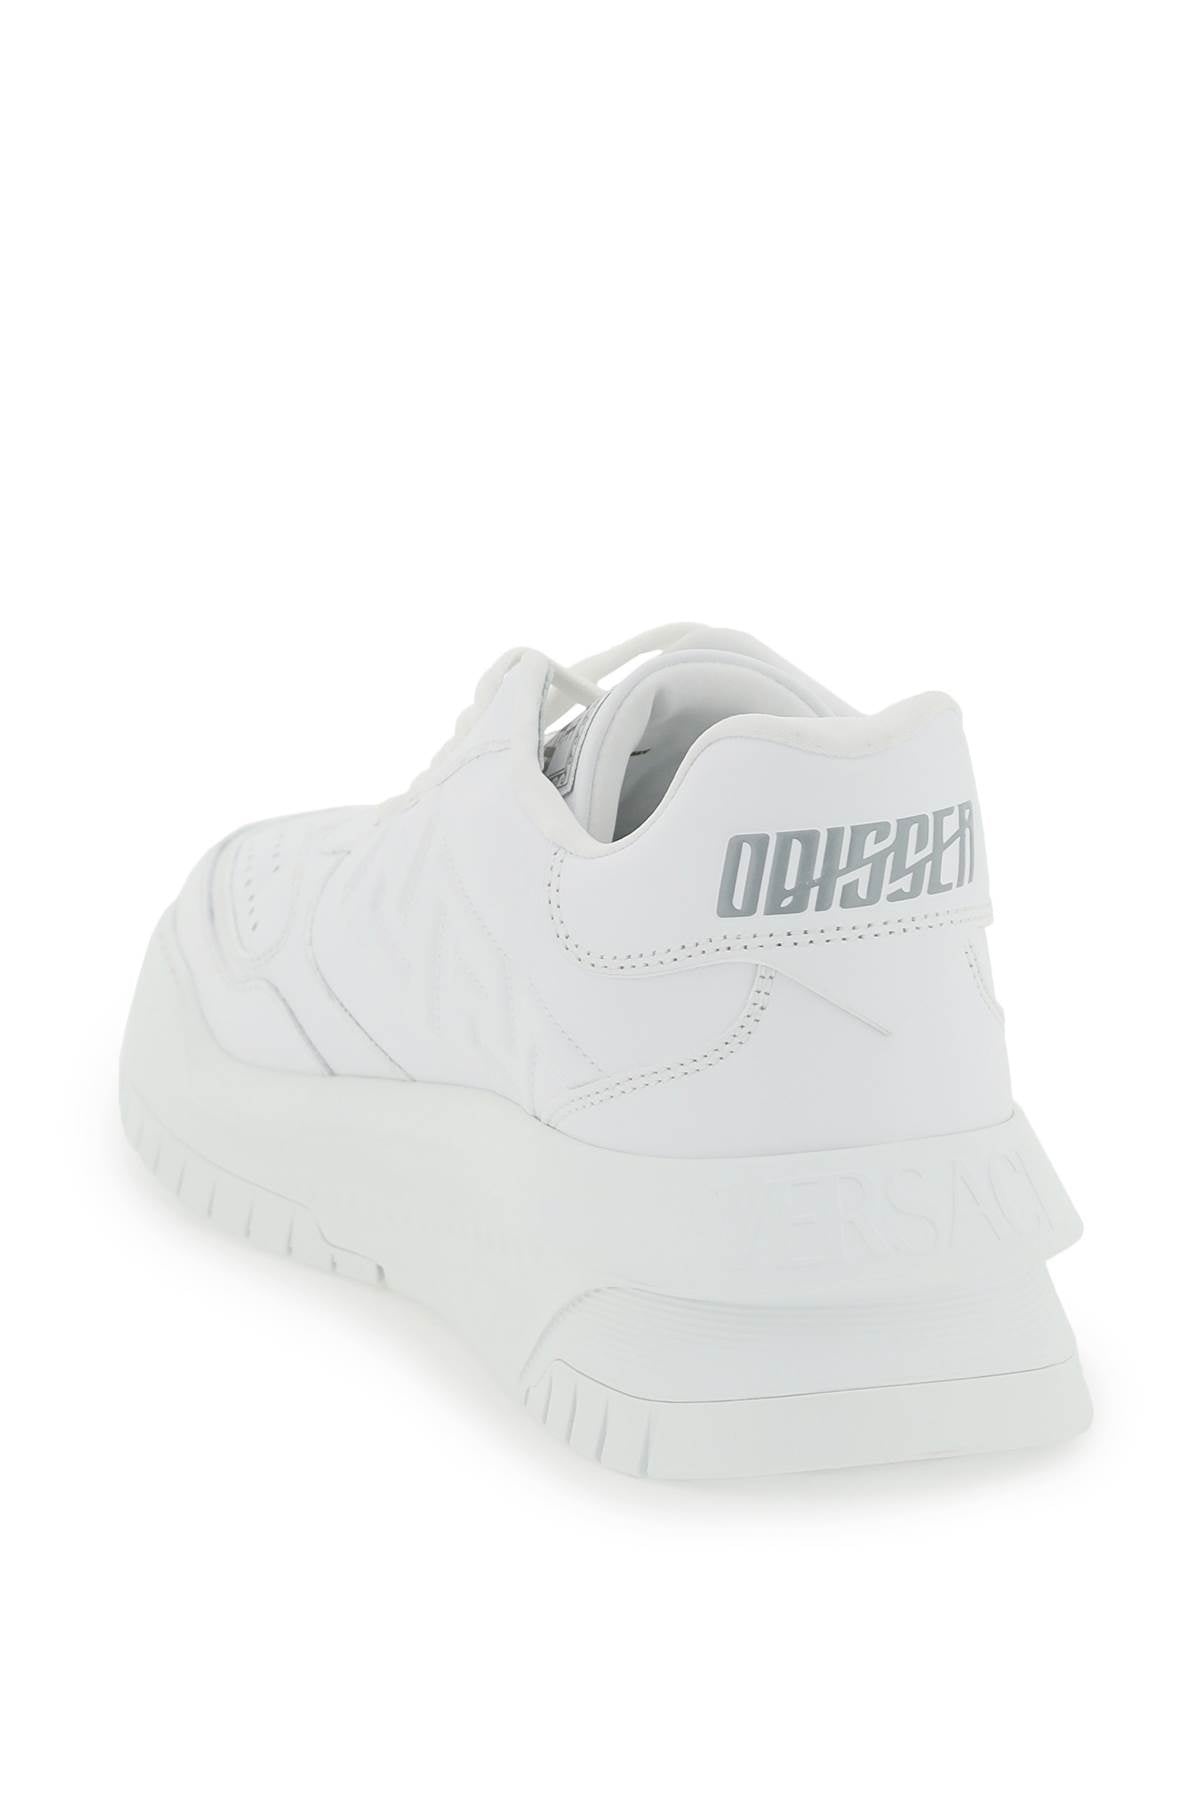 Odissea Sneakers - 3